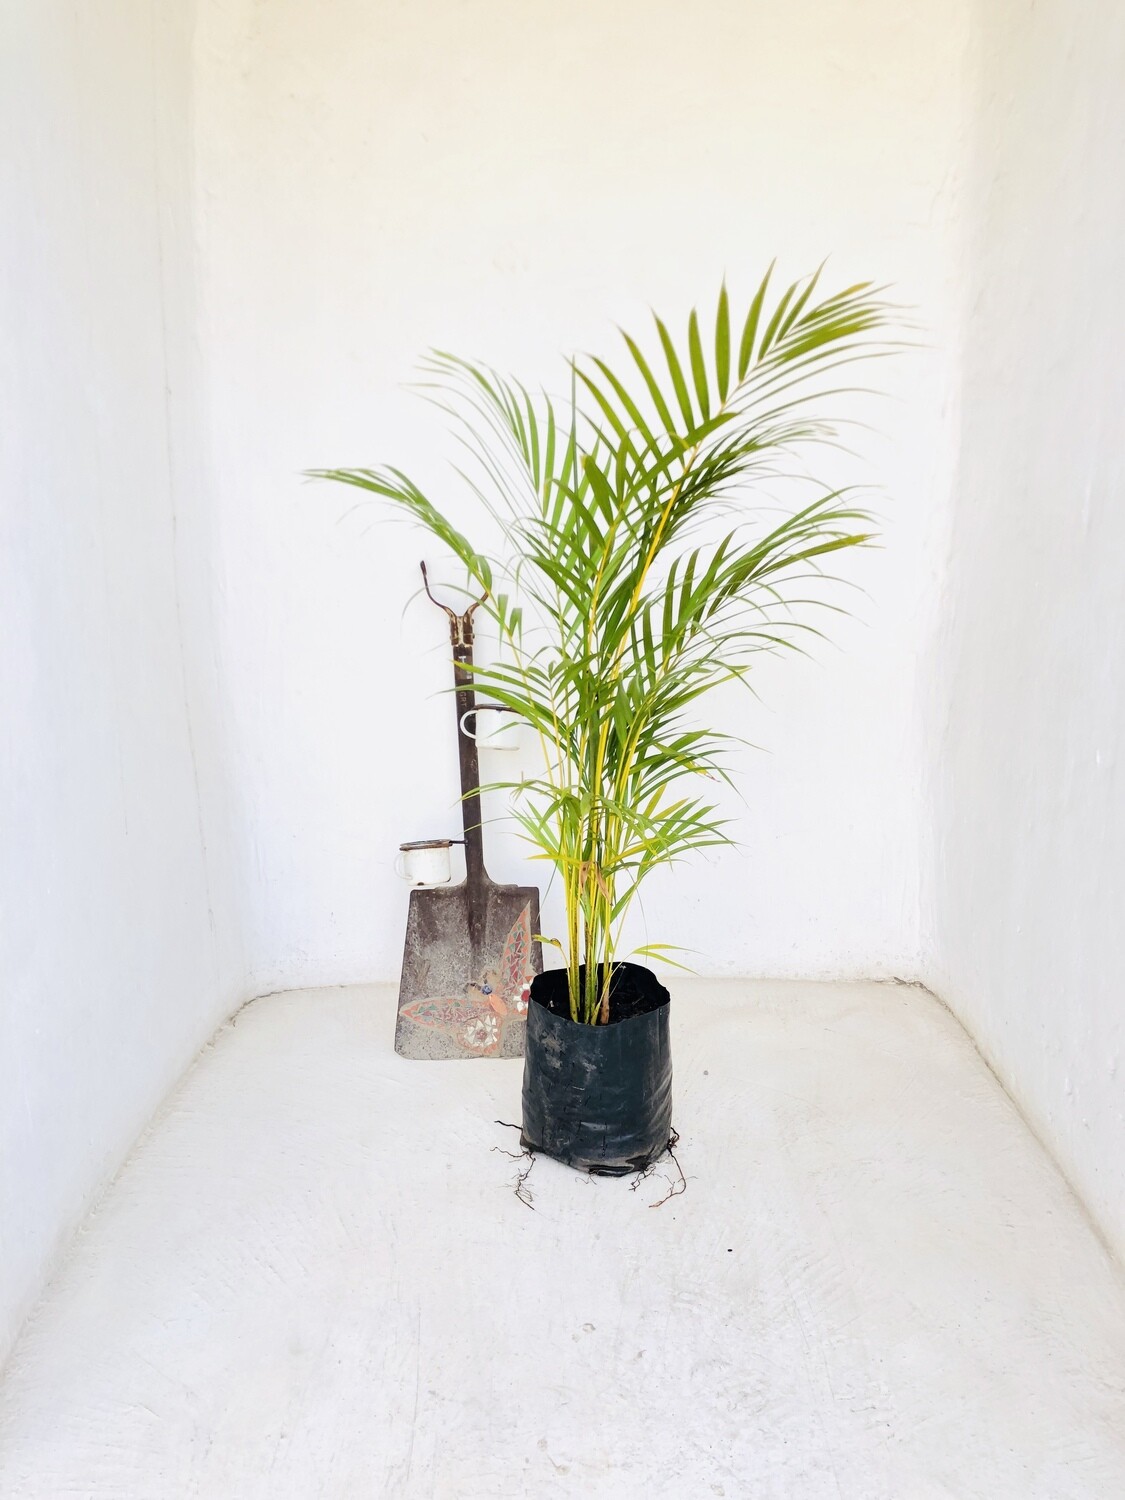 Bamboo Palm 10 liter